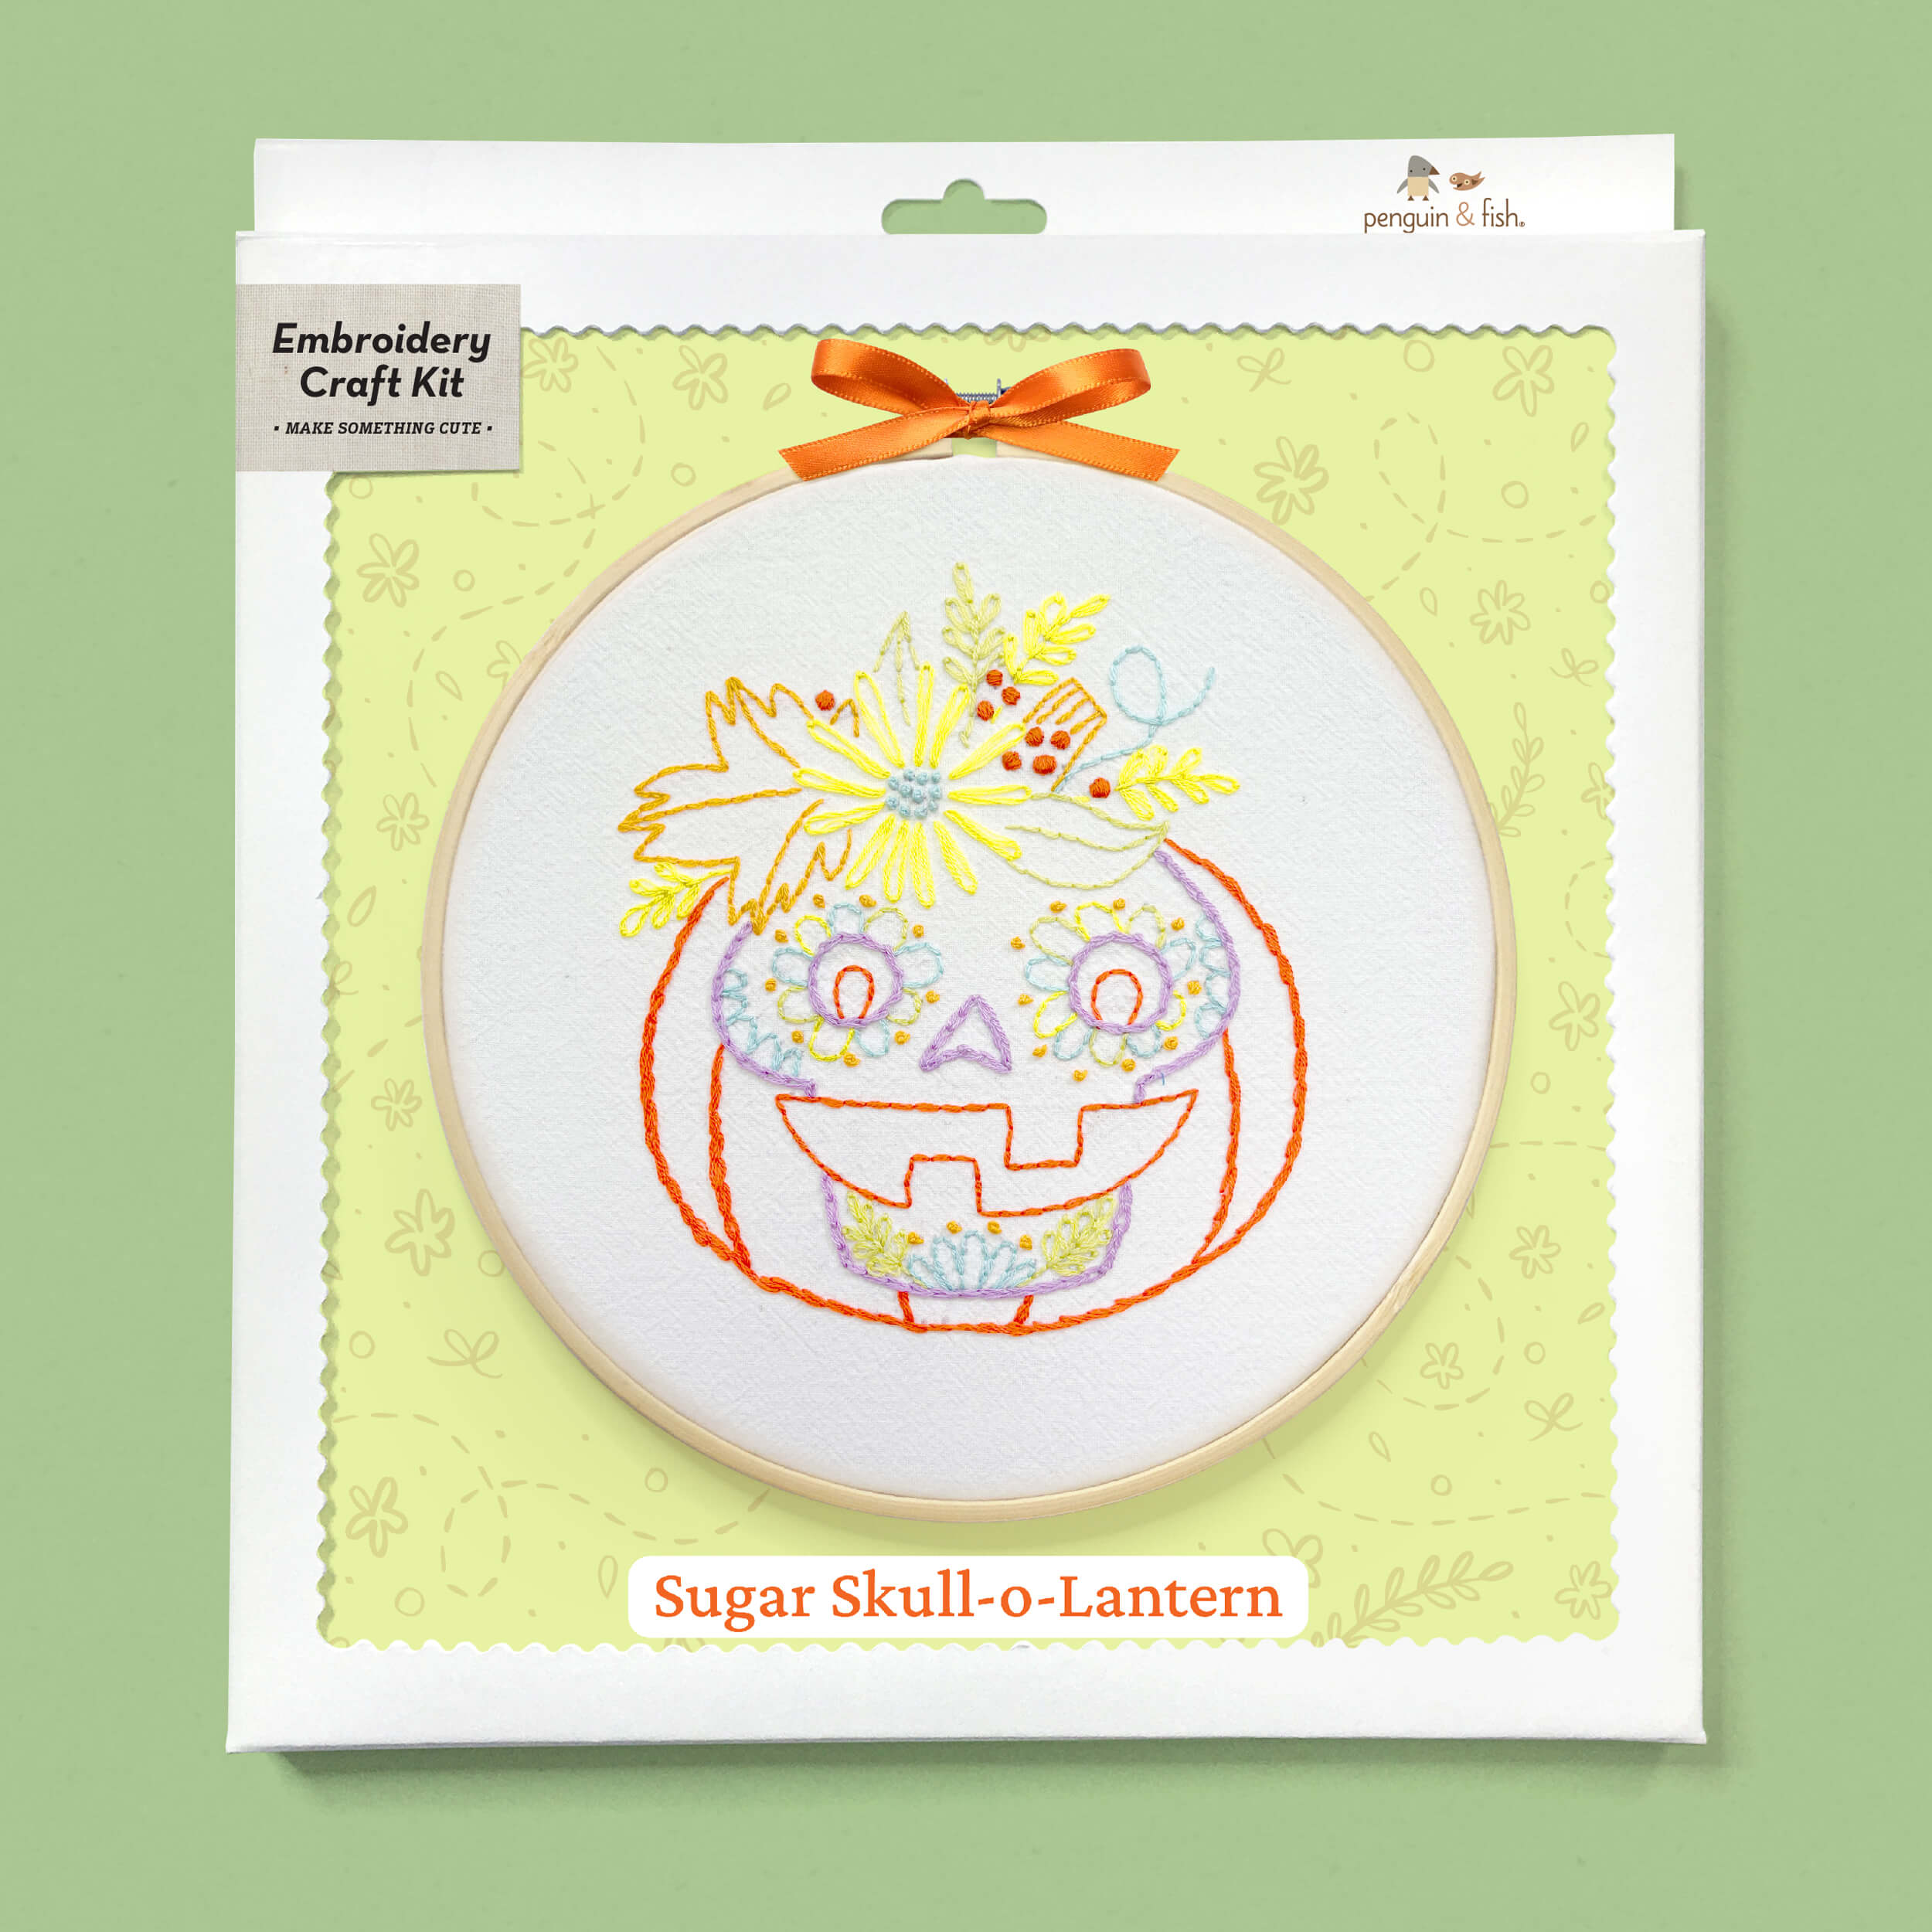 Sugar Skull-O'-Lantern embroidery supplies kit in a box